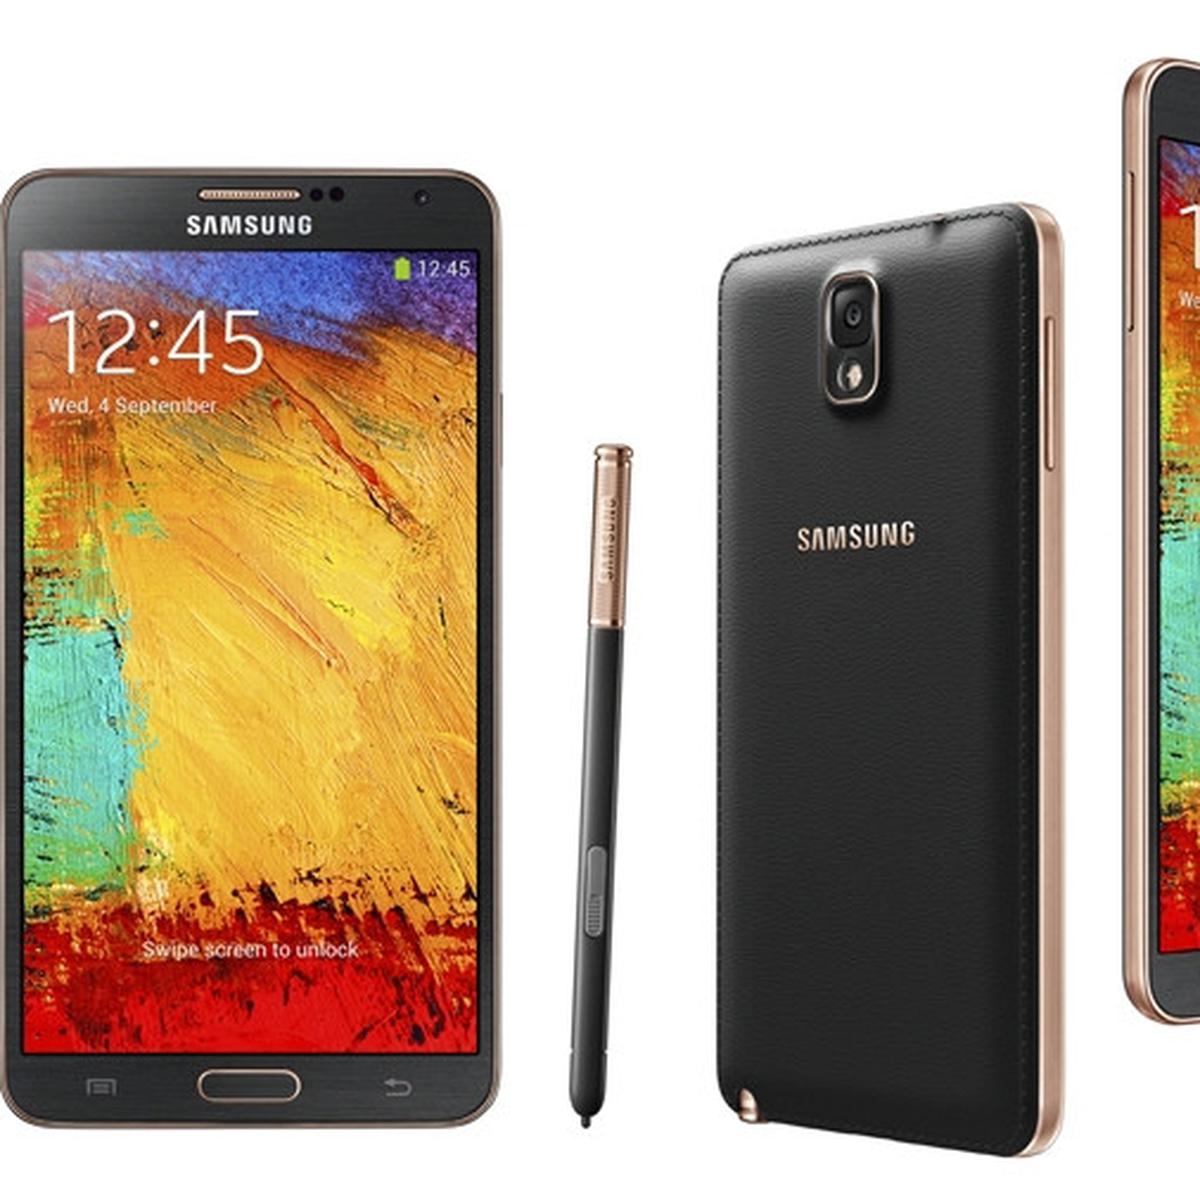 Harga Samsung Galaxy Note 3 Baru dan Bekas di Pasaran, Performa Juara - Tekno Liputan6.com